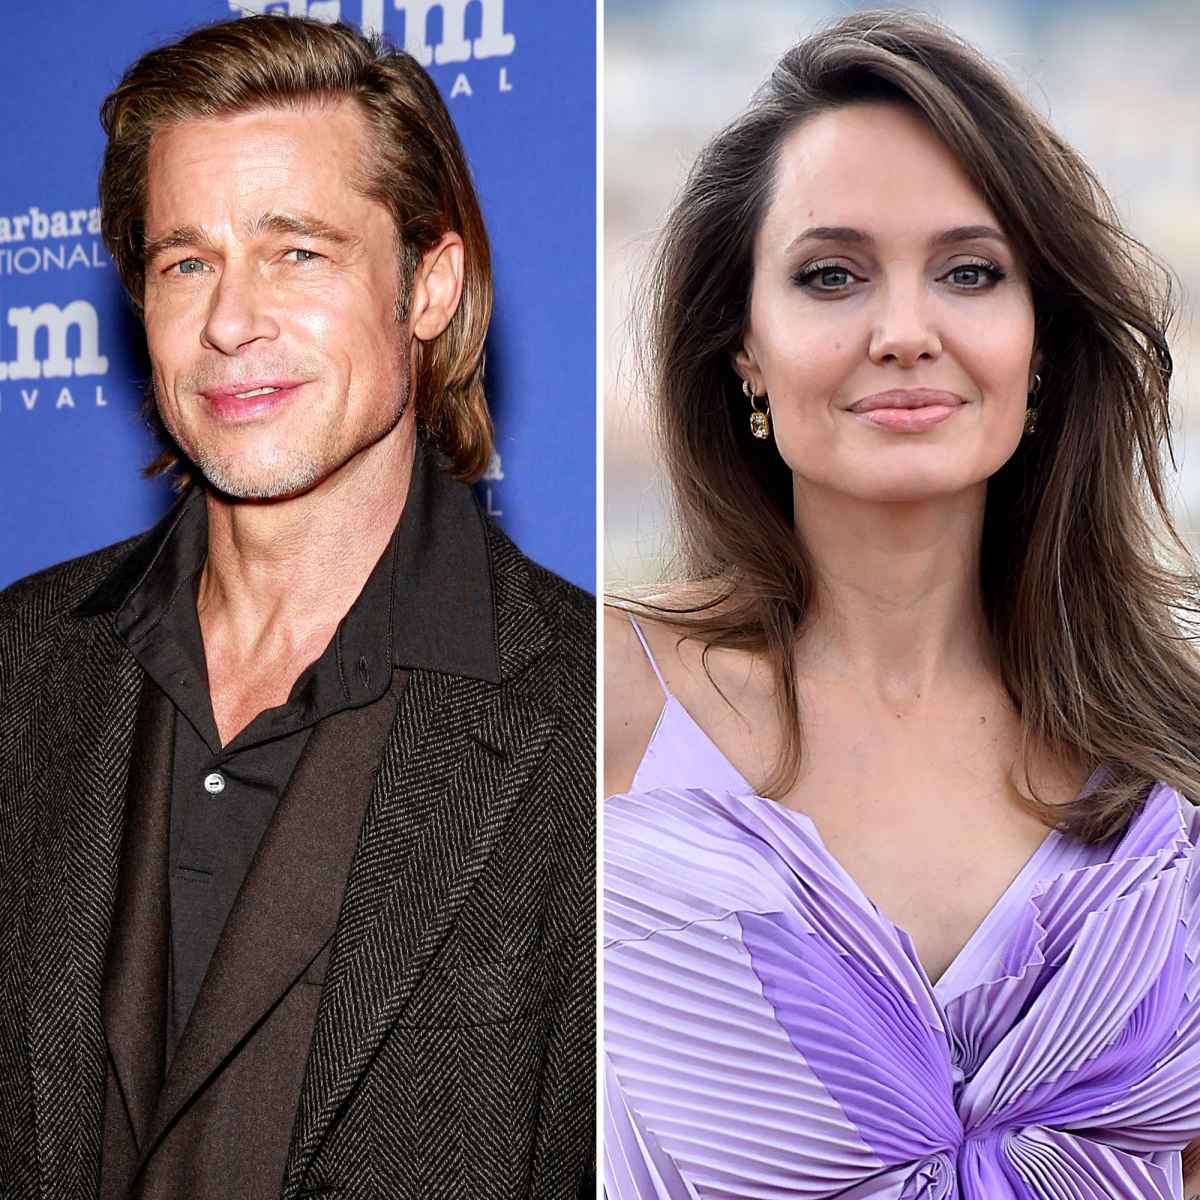 Drugs! Affairs! 10 Secret Signs Angelina Jolie & Brad Pitt Were